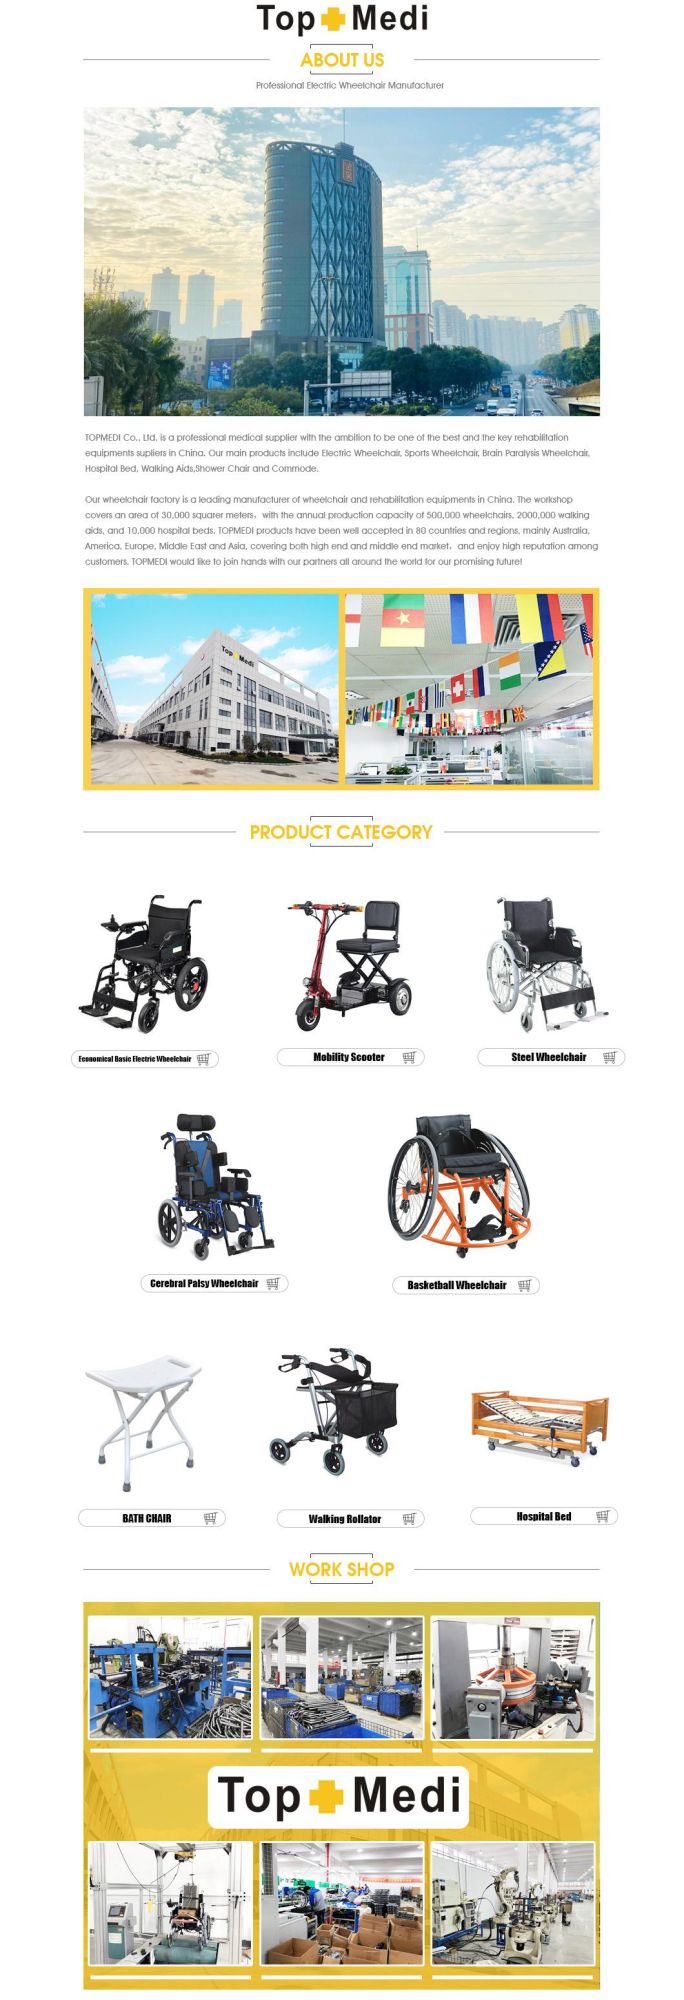 Lightweight Foldabale Tranist Almuninum Wheelchair for Elder People